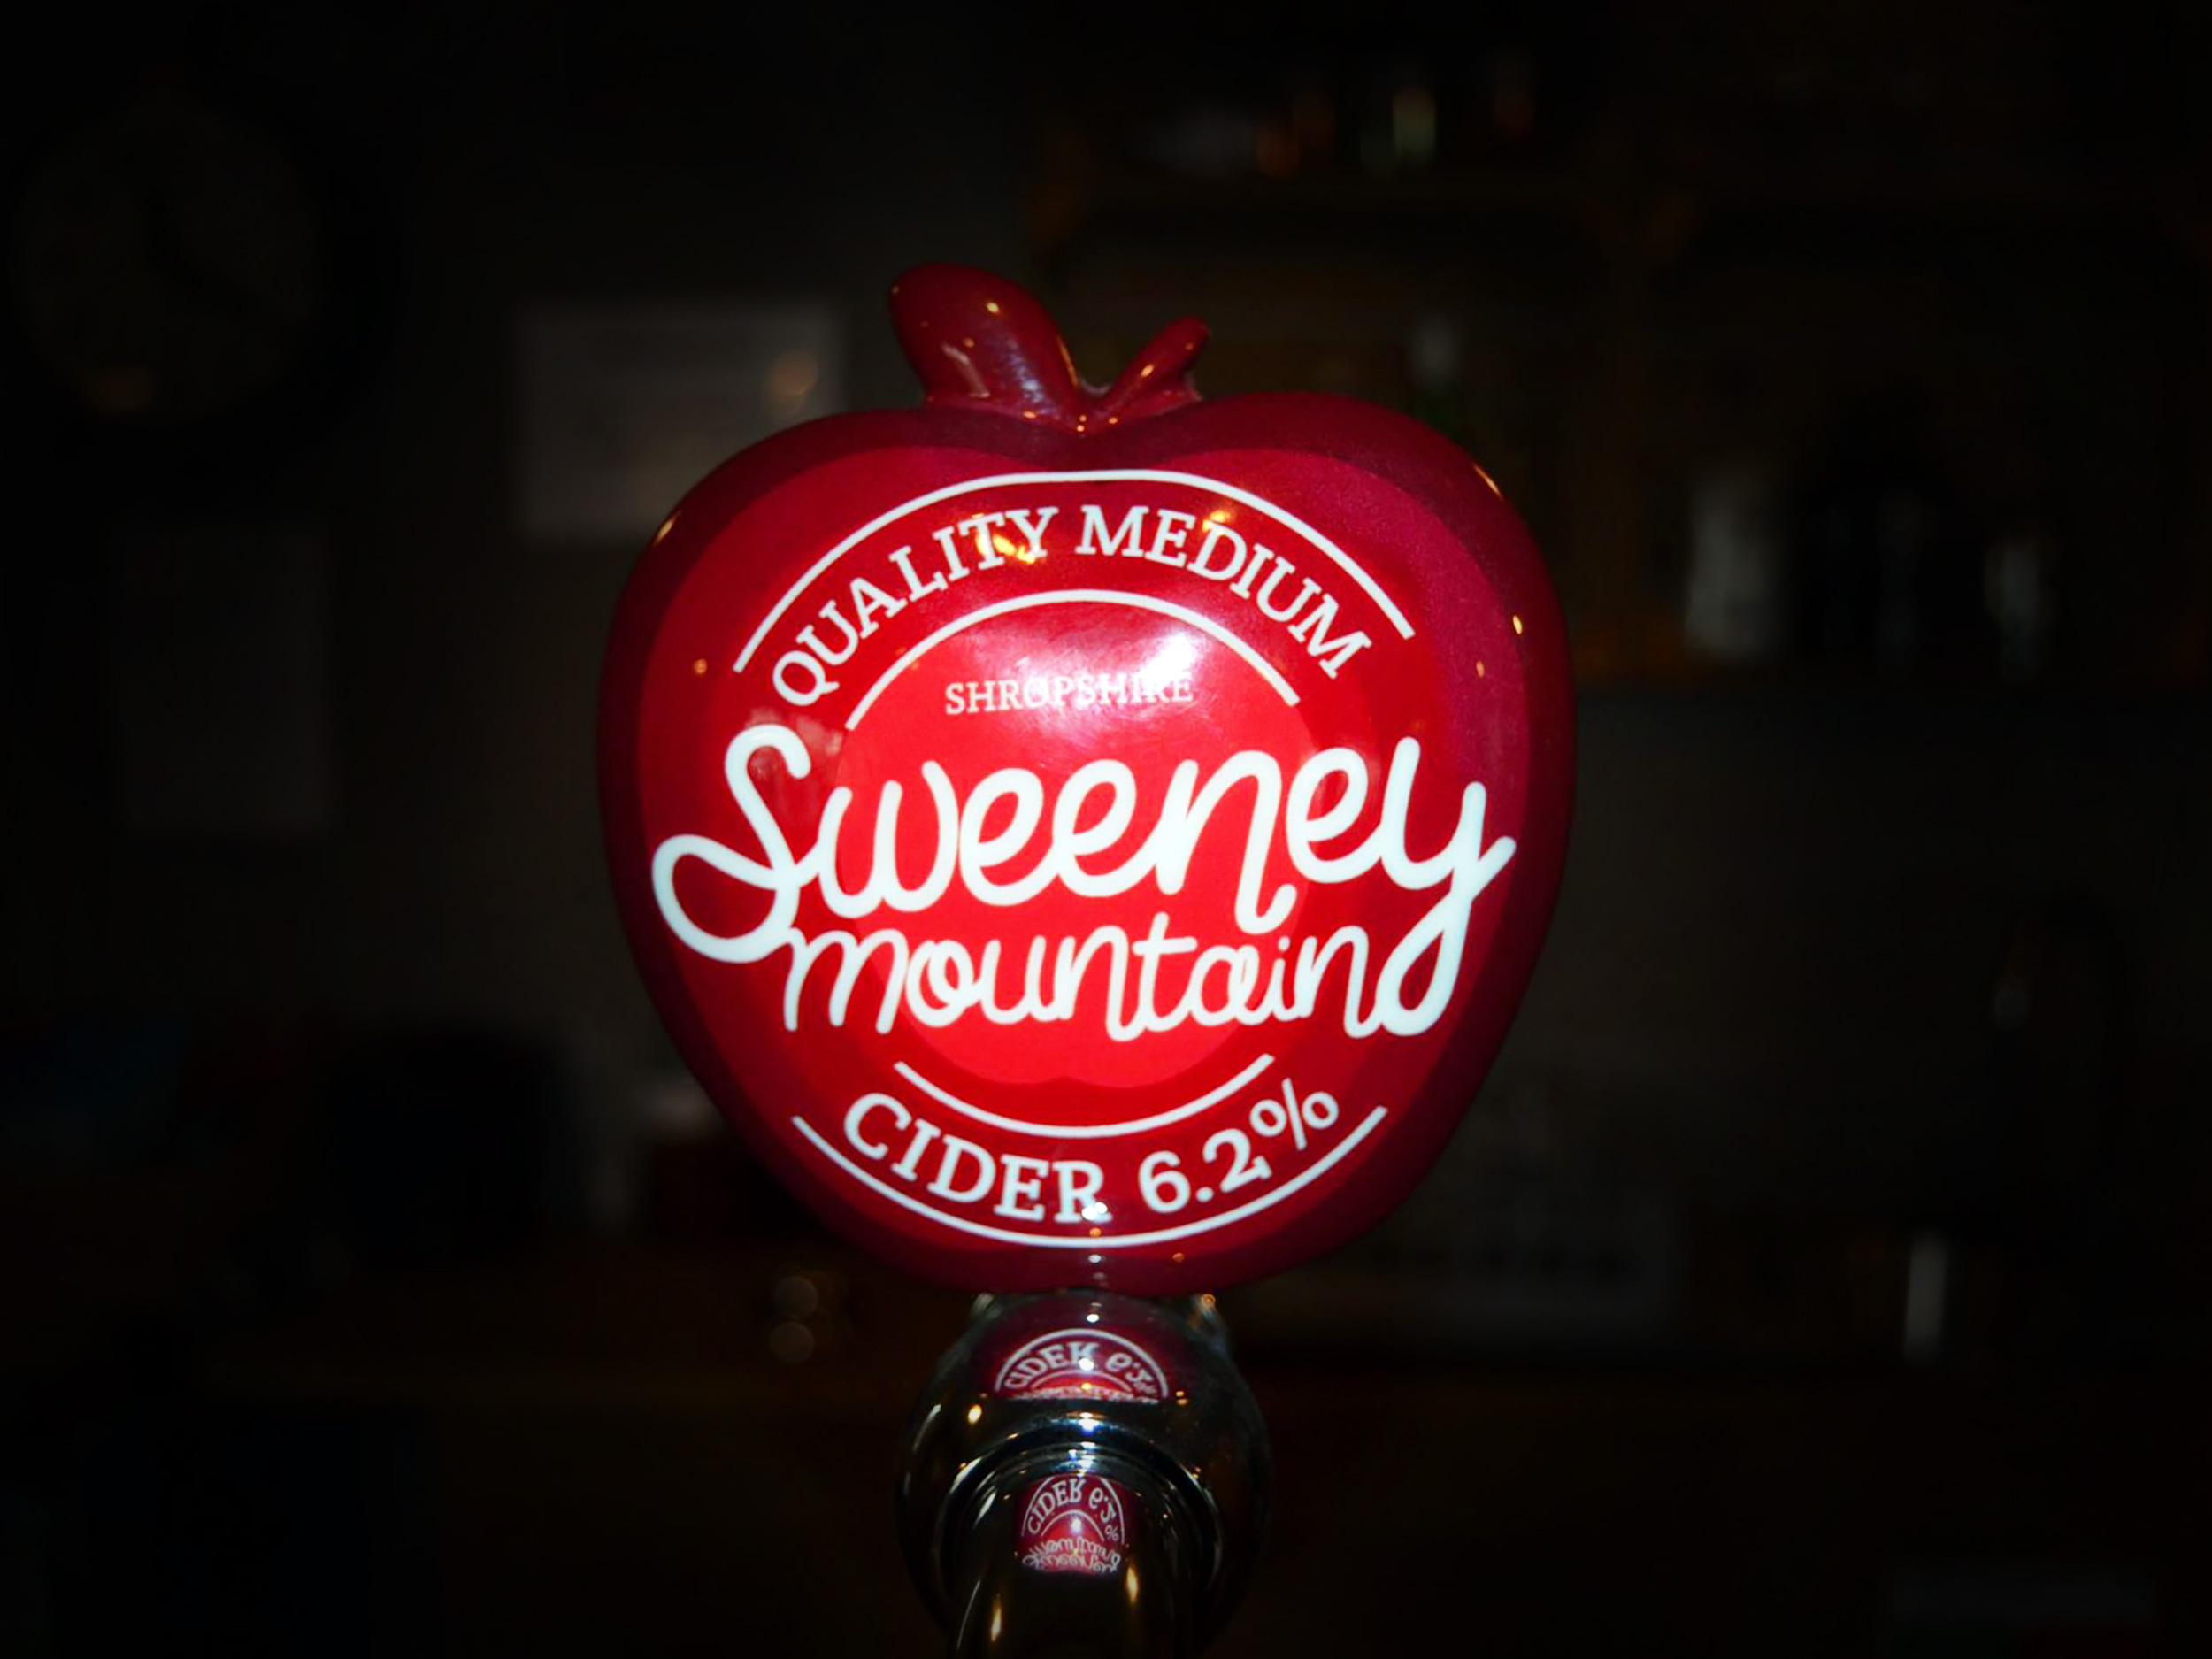 Sweeney Mountain Cider pump clip